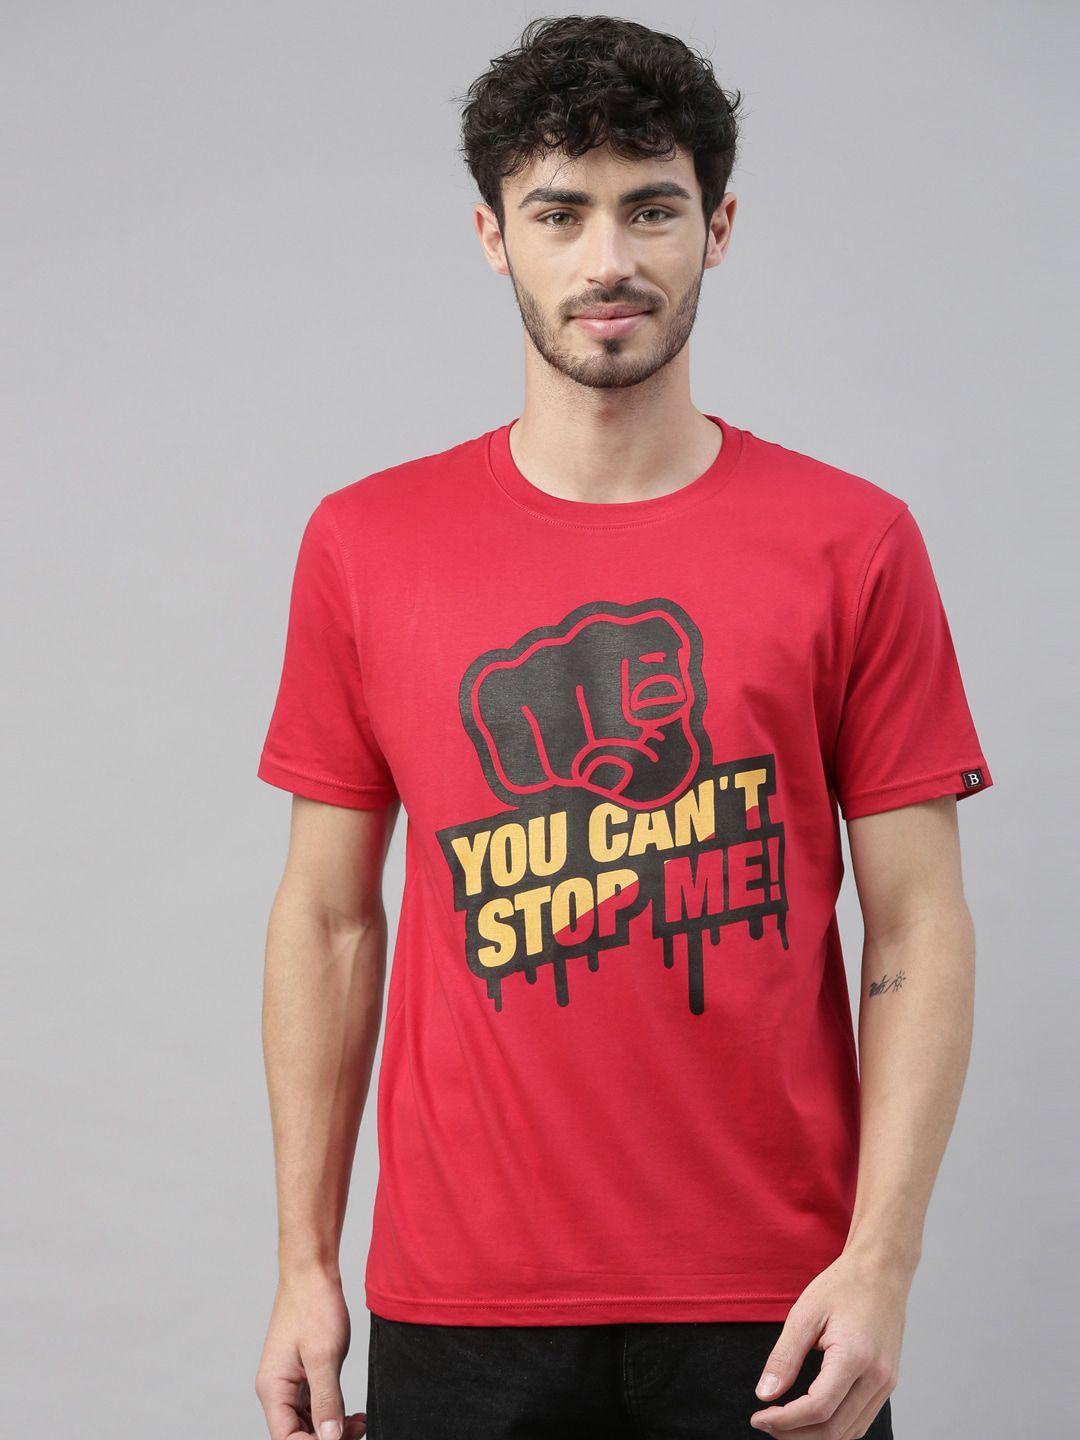 bushirt men red & black you can't stop me printed t-shirt